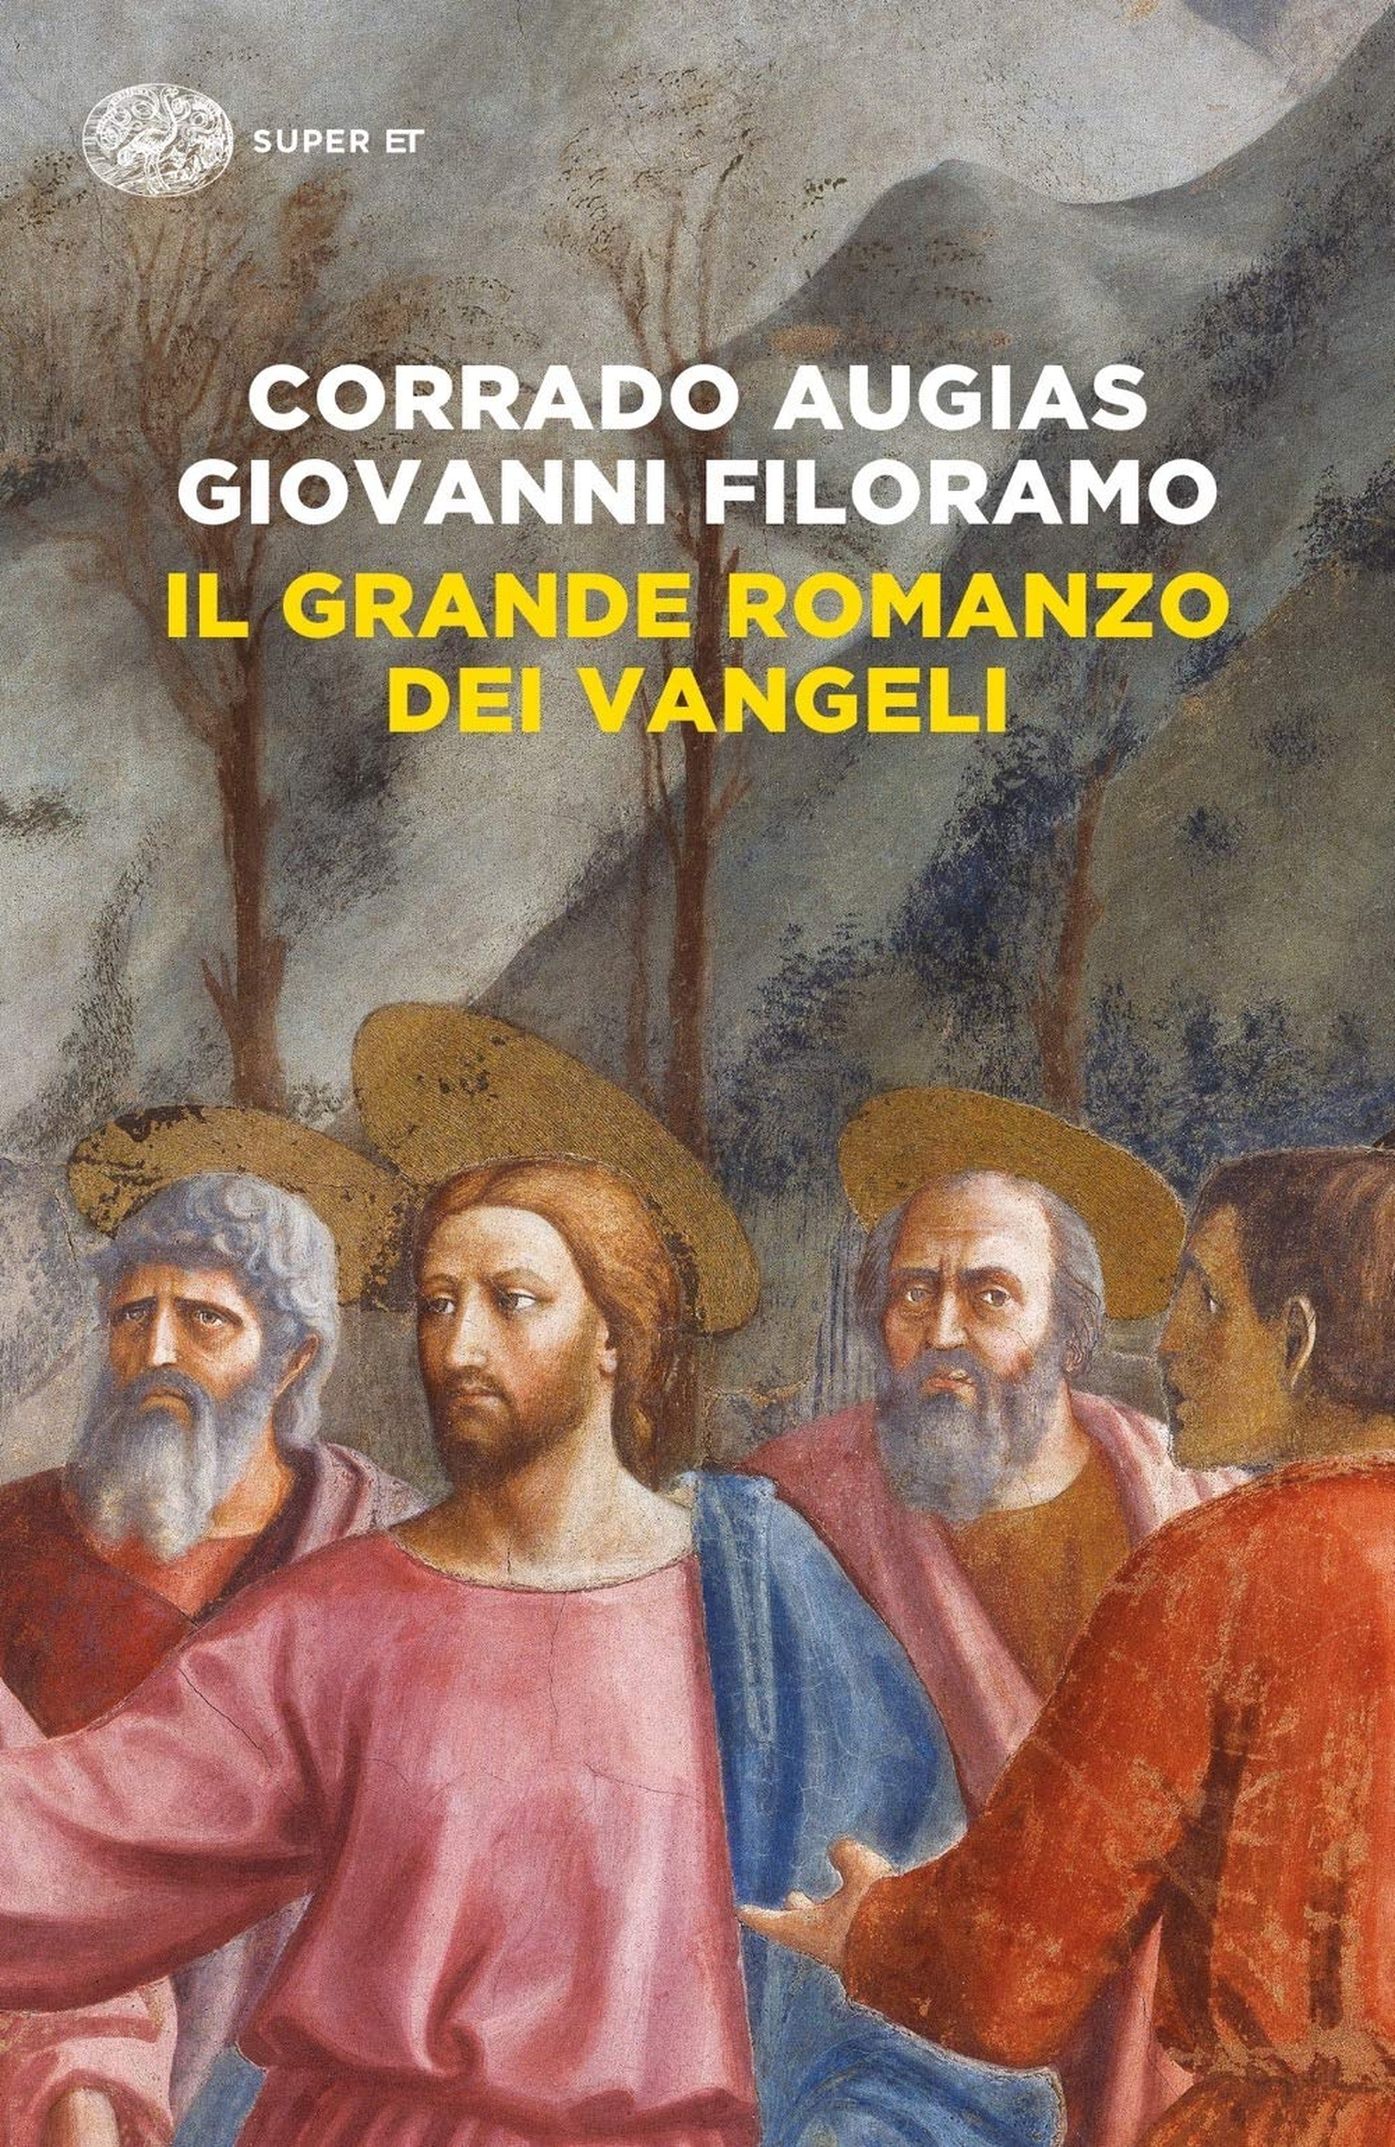 Corrado Augias & Giovanni Filoramo, Il grande romanzo dei Vangeli (Einaudi, Torino 2021)